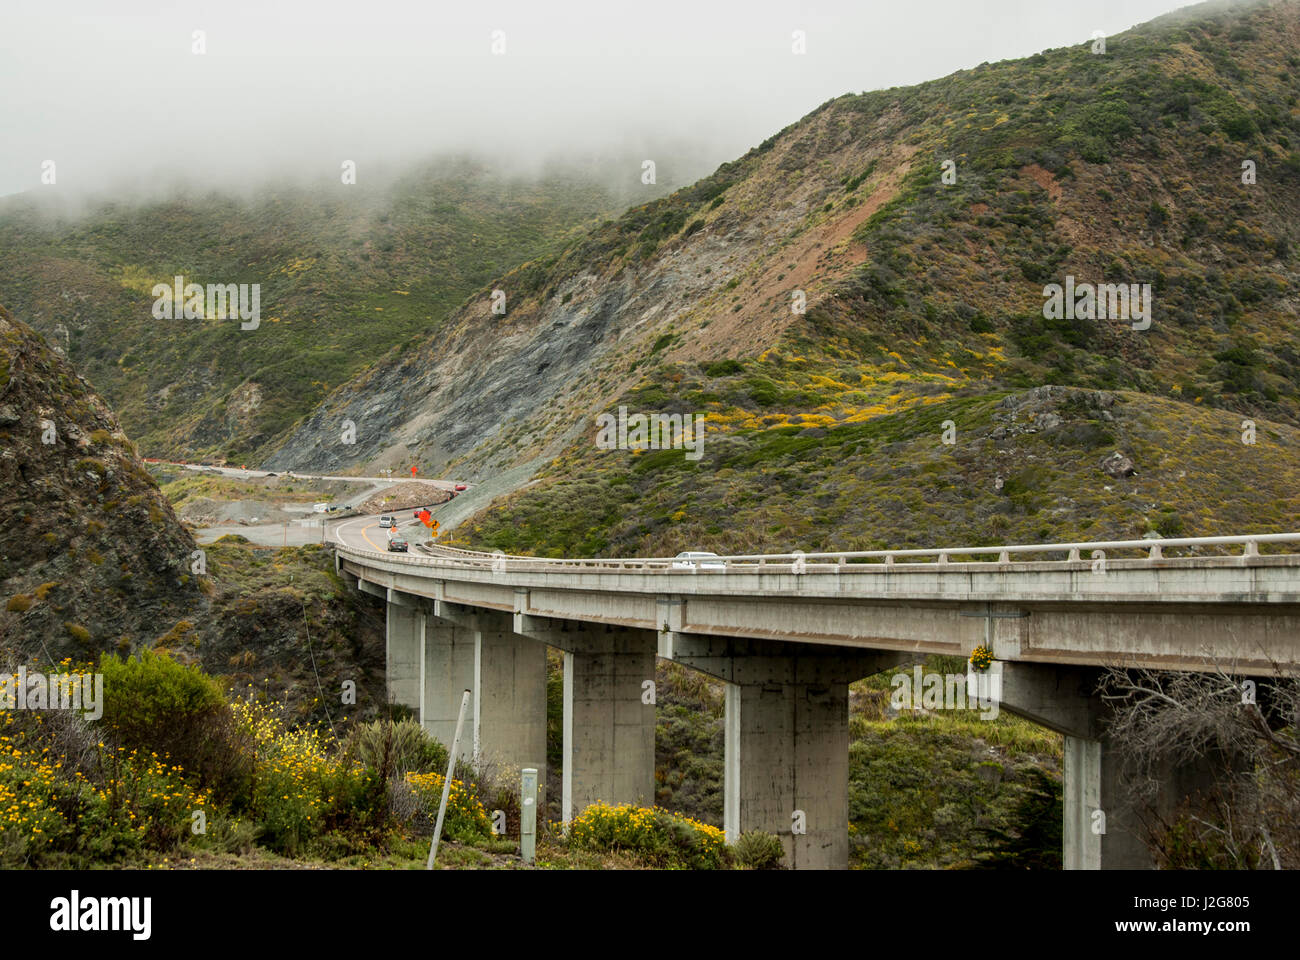 USA, California, Central Coast, Big Sur, bridge and road over Willow Creek, undergoing construction, fog Stock Photo